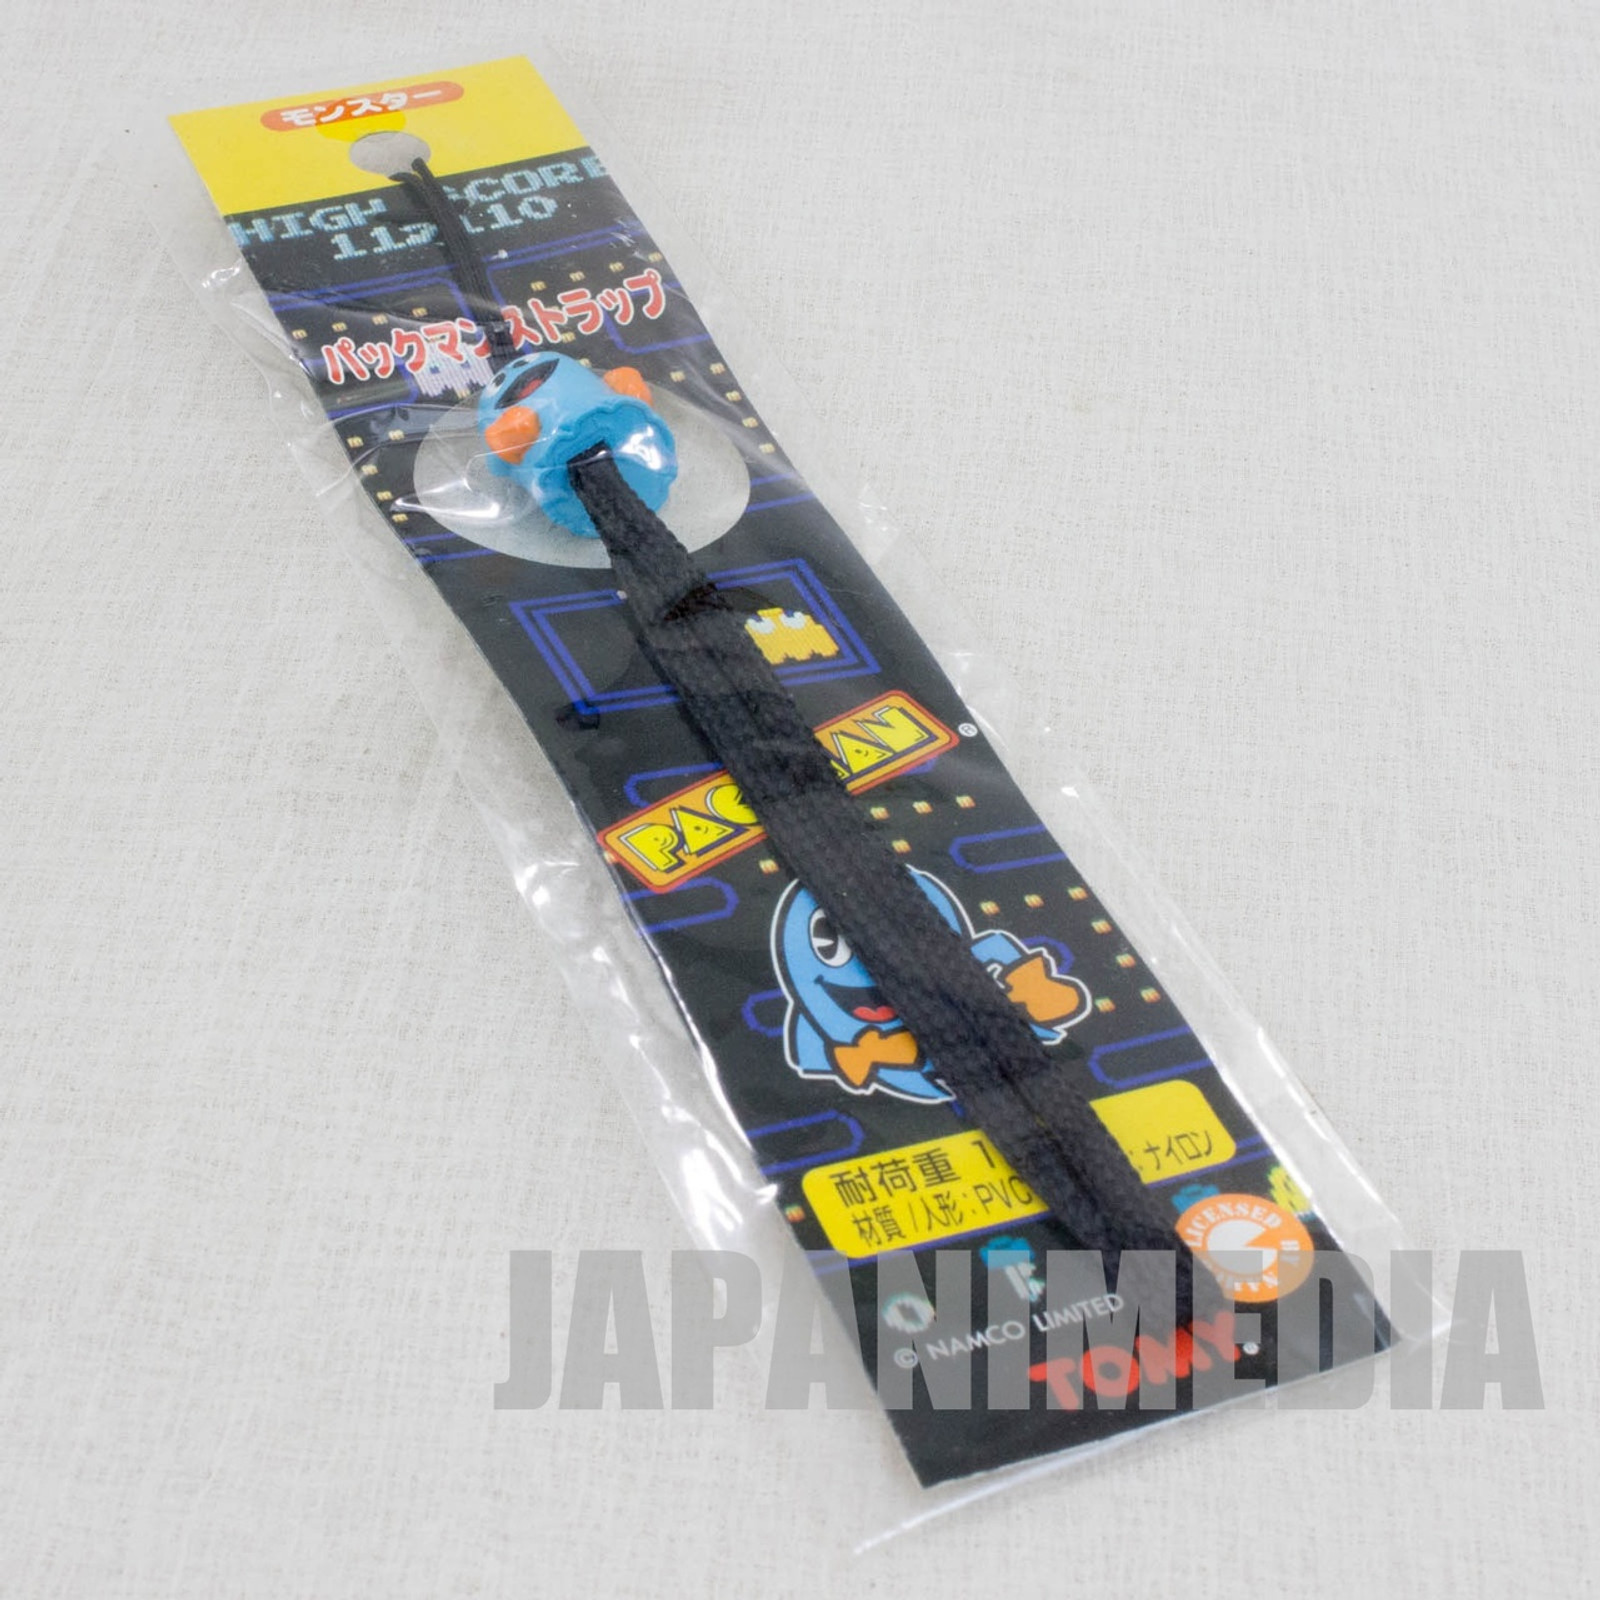 Pac-man Monster BASHFUL (INKY) Figure Strap Namco JAPAN GAME